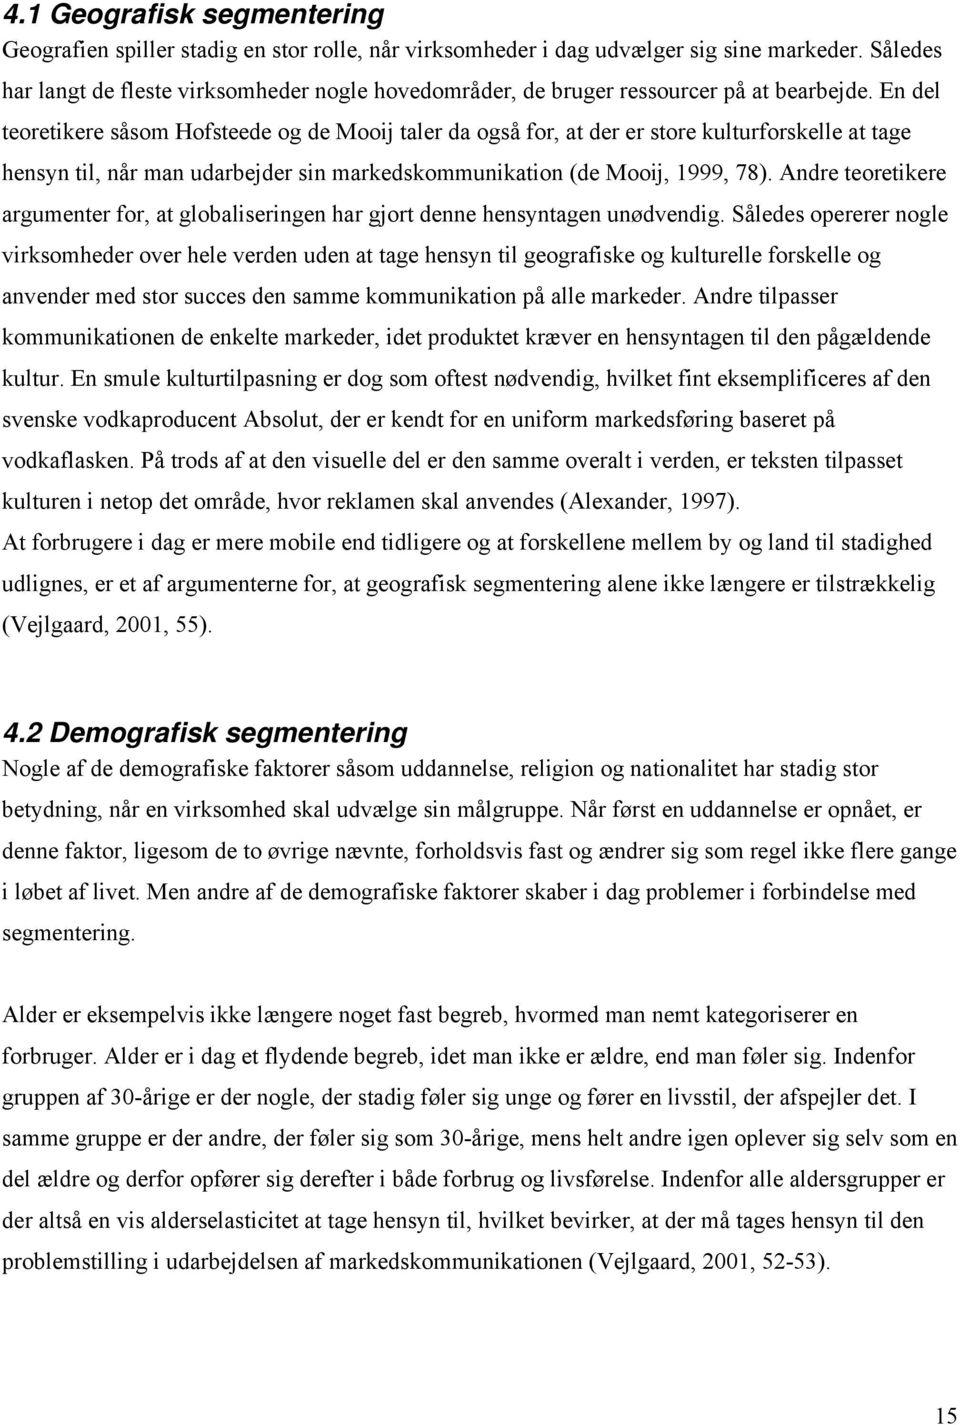 Aarhus School of Business Institute of business language June Helle Skovdal Thorup Number: Course name: Dissertation - PDF Free Download